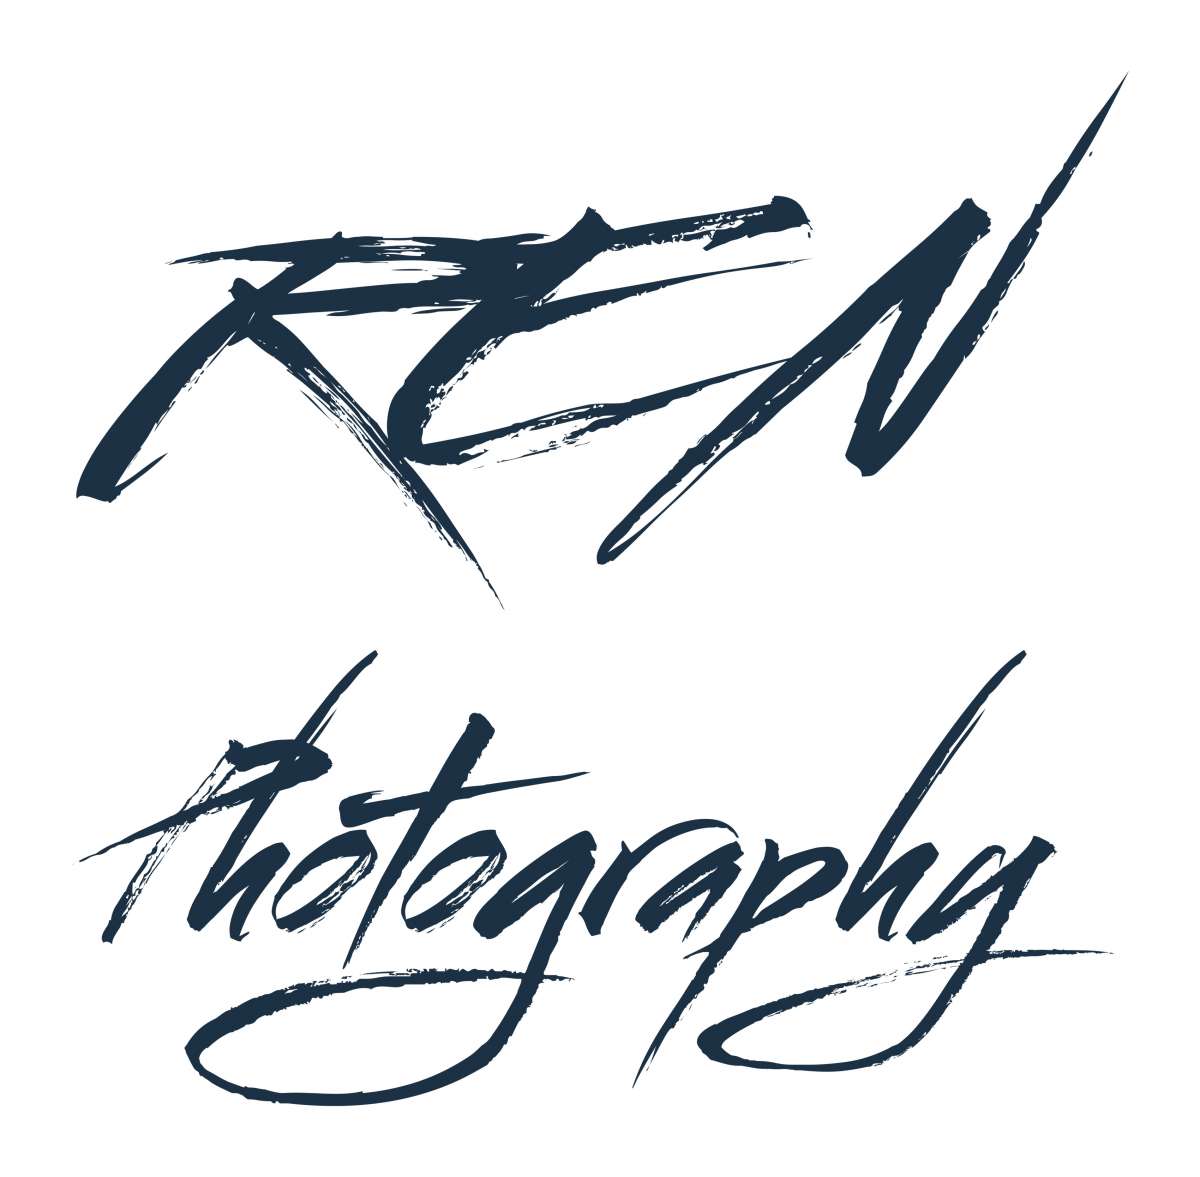 REN Photography - Cascais - Fotografia de Rosto